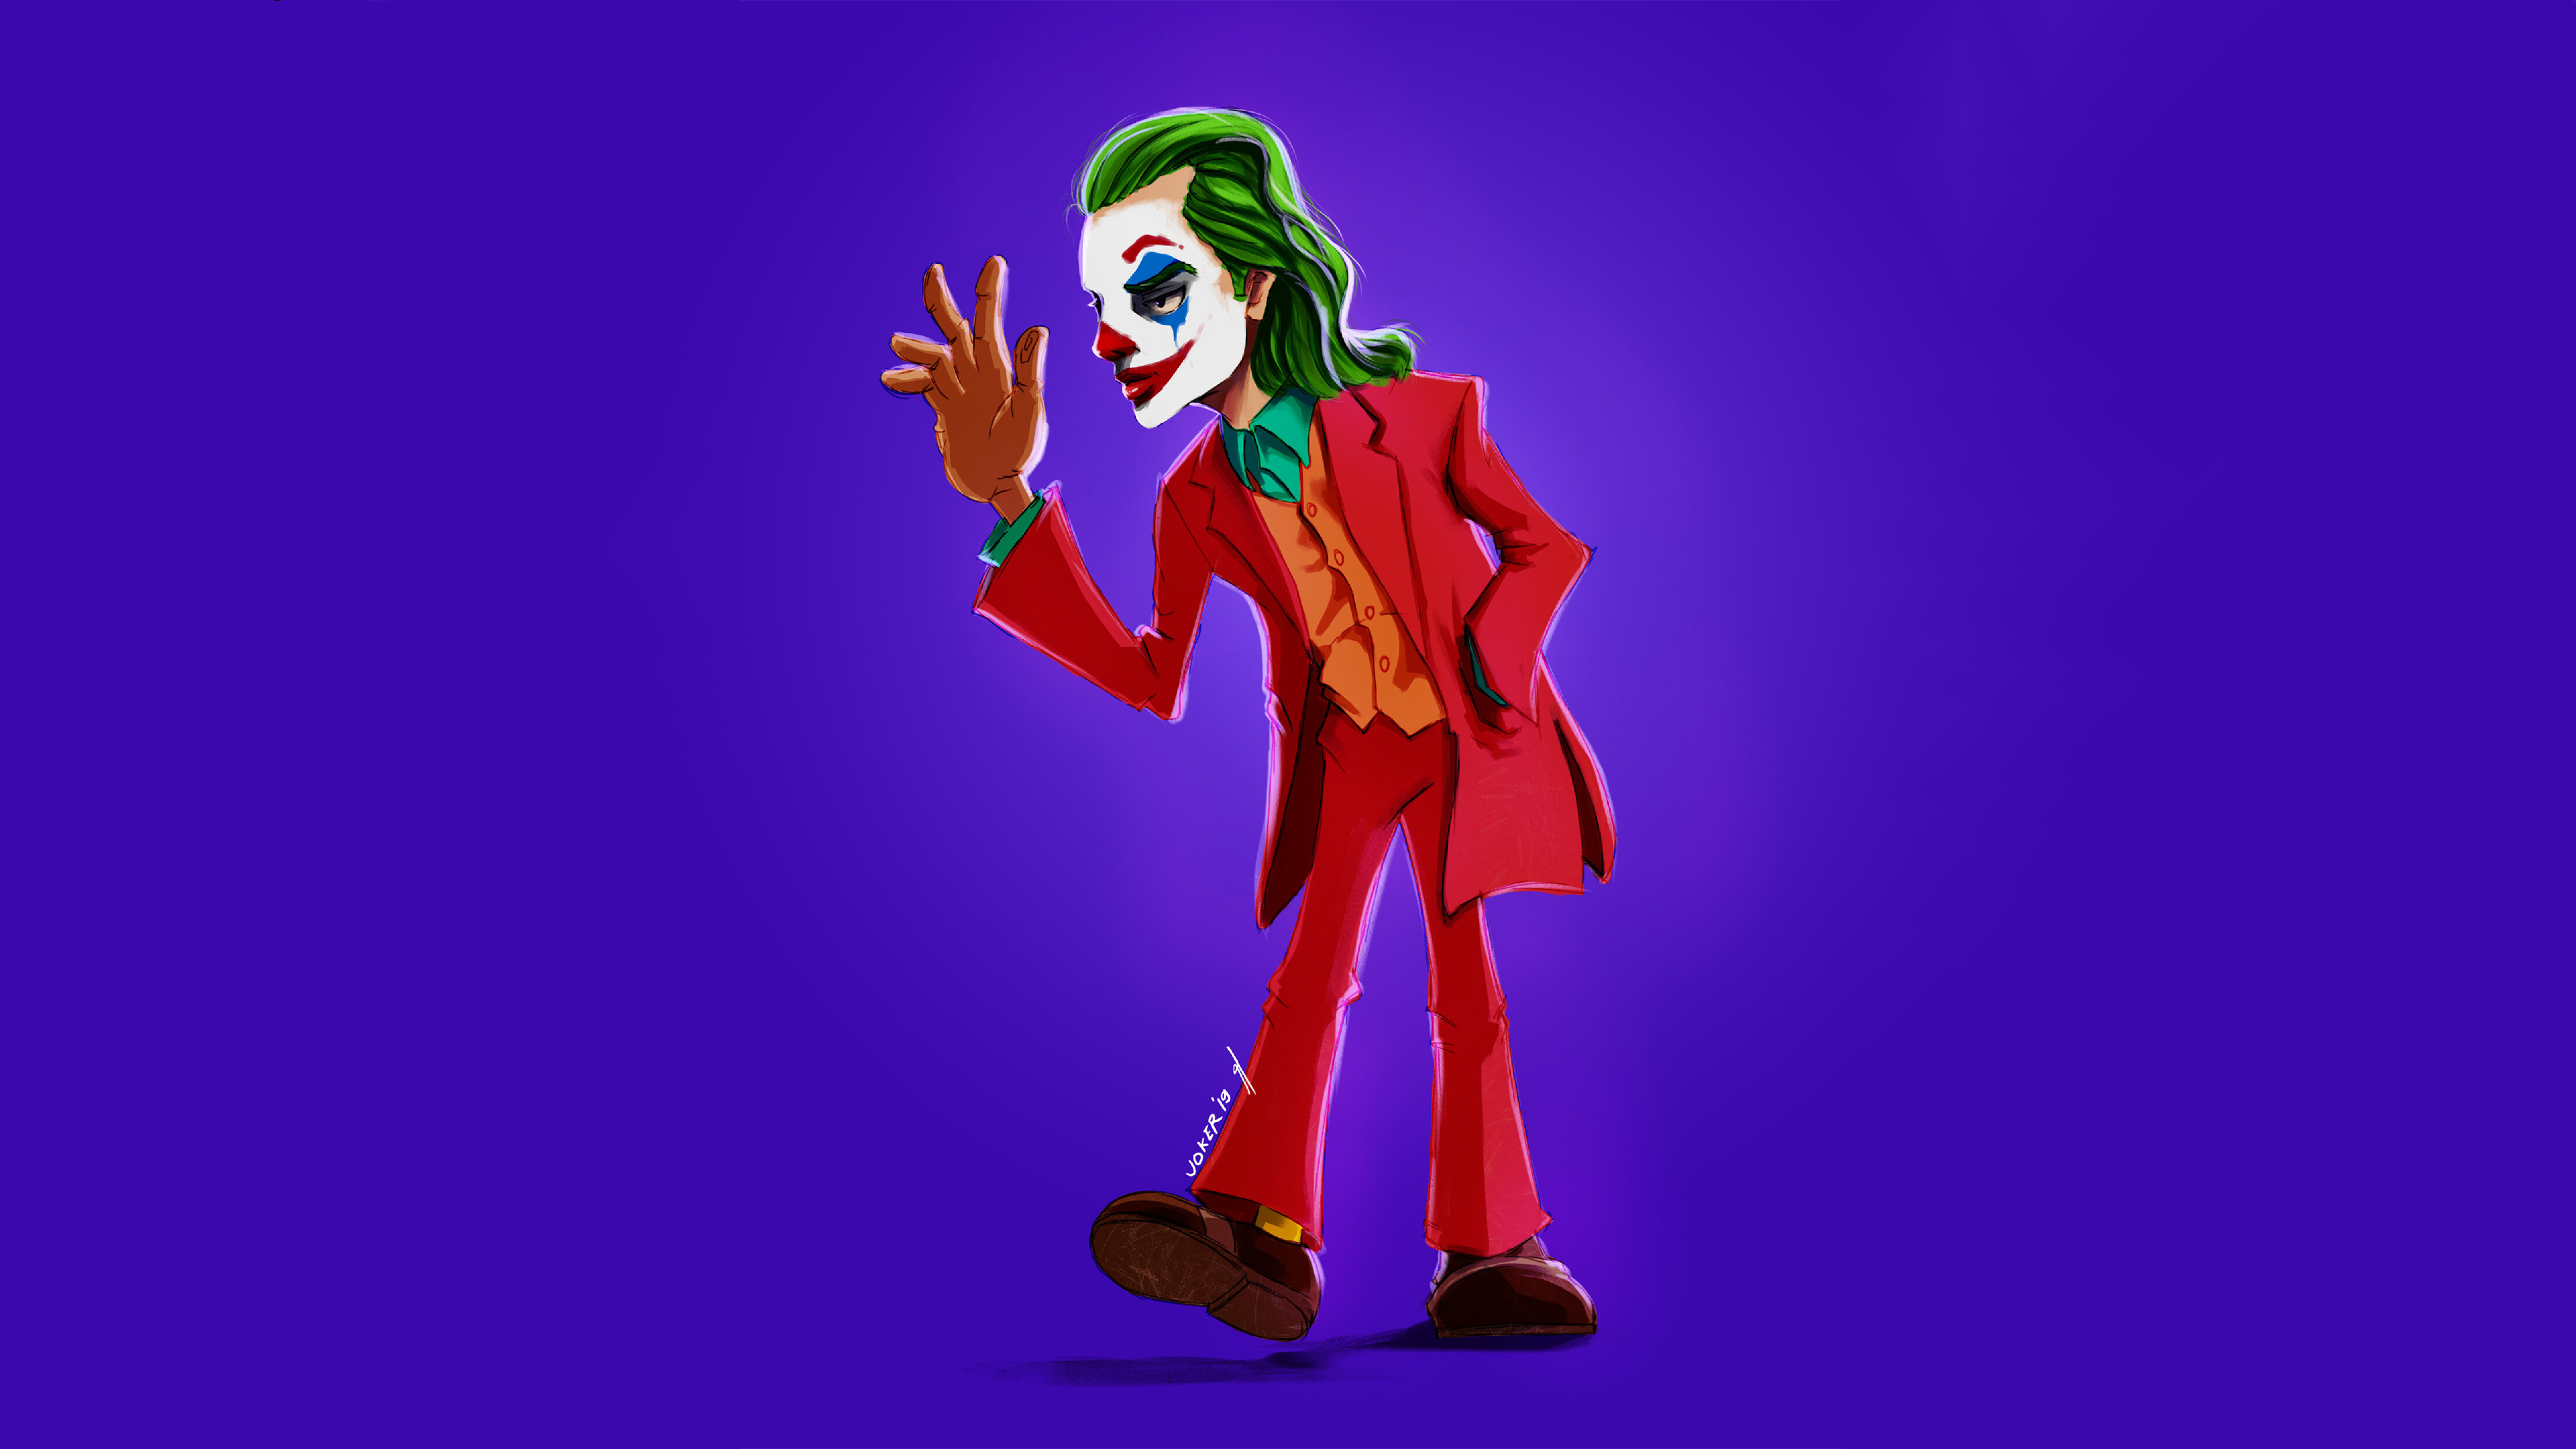 7680x4320 New 4K Joker 8K Wallpaper, HD Superheroes 4K Wallpapers, Images,  Photos and Background - Wallpapers Den